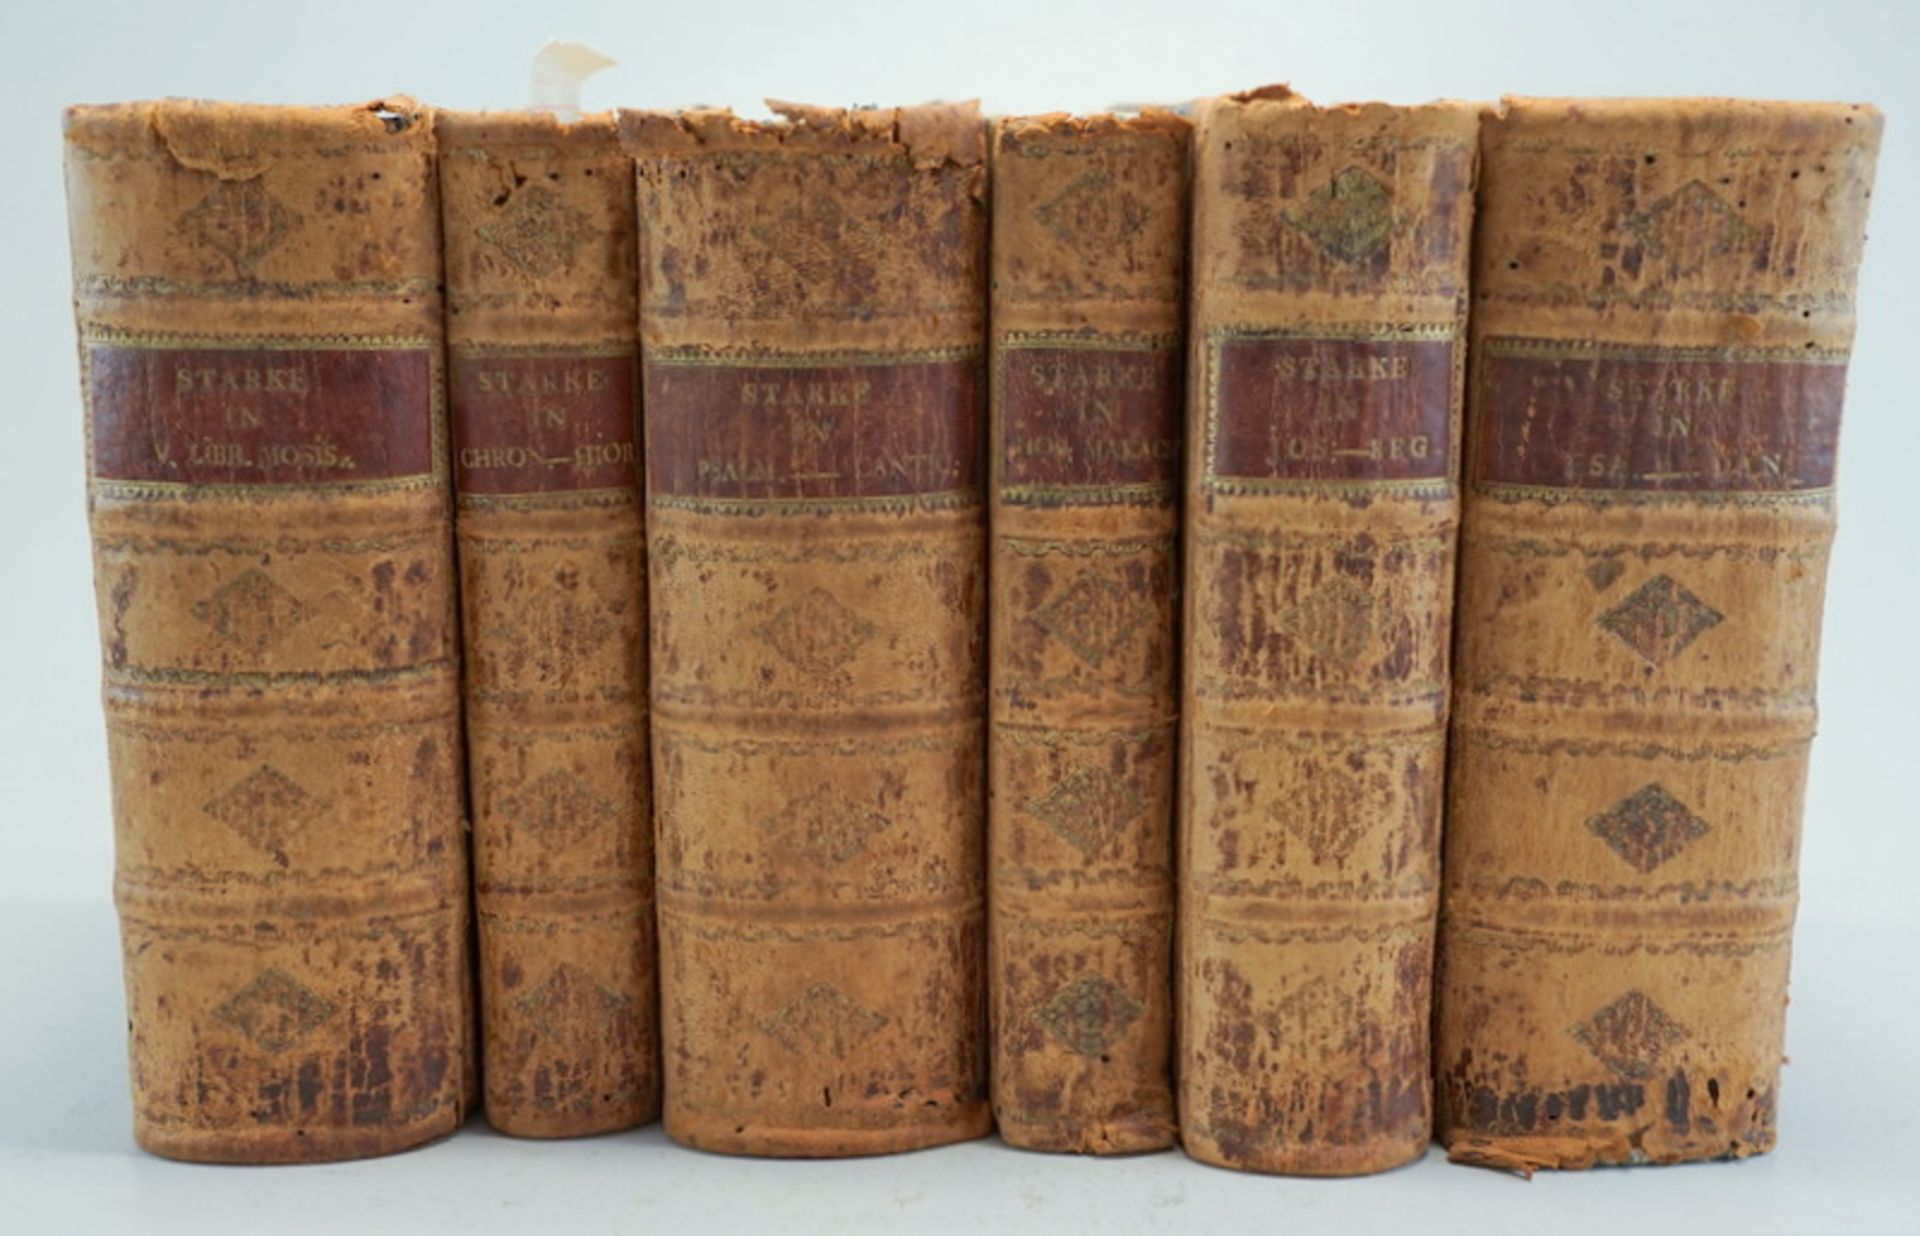 Synopsis Bibelexegese v Chr. Starke in 5 Bänden Leipzig 1750 ff.